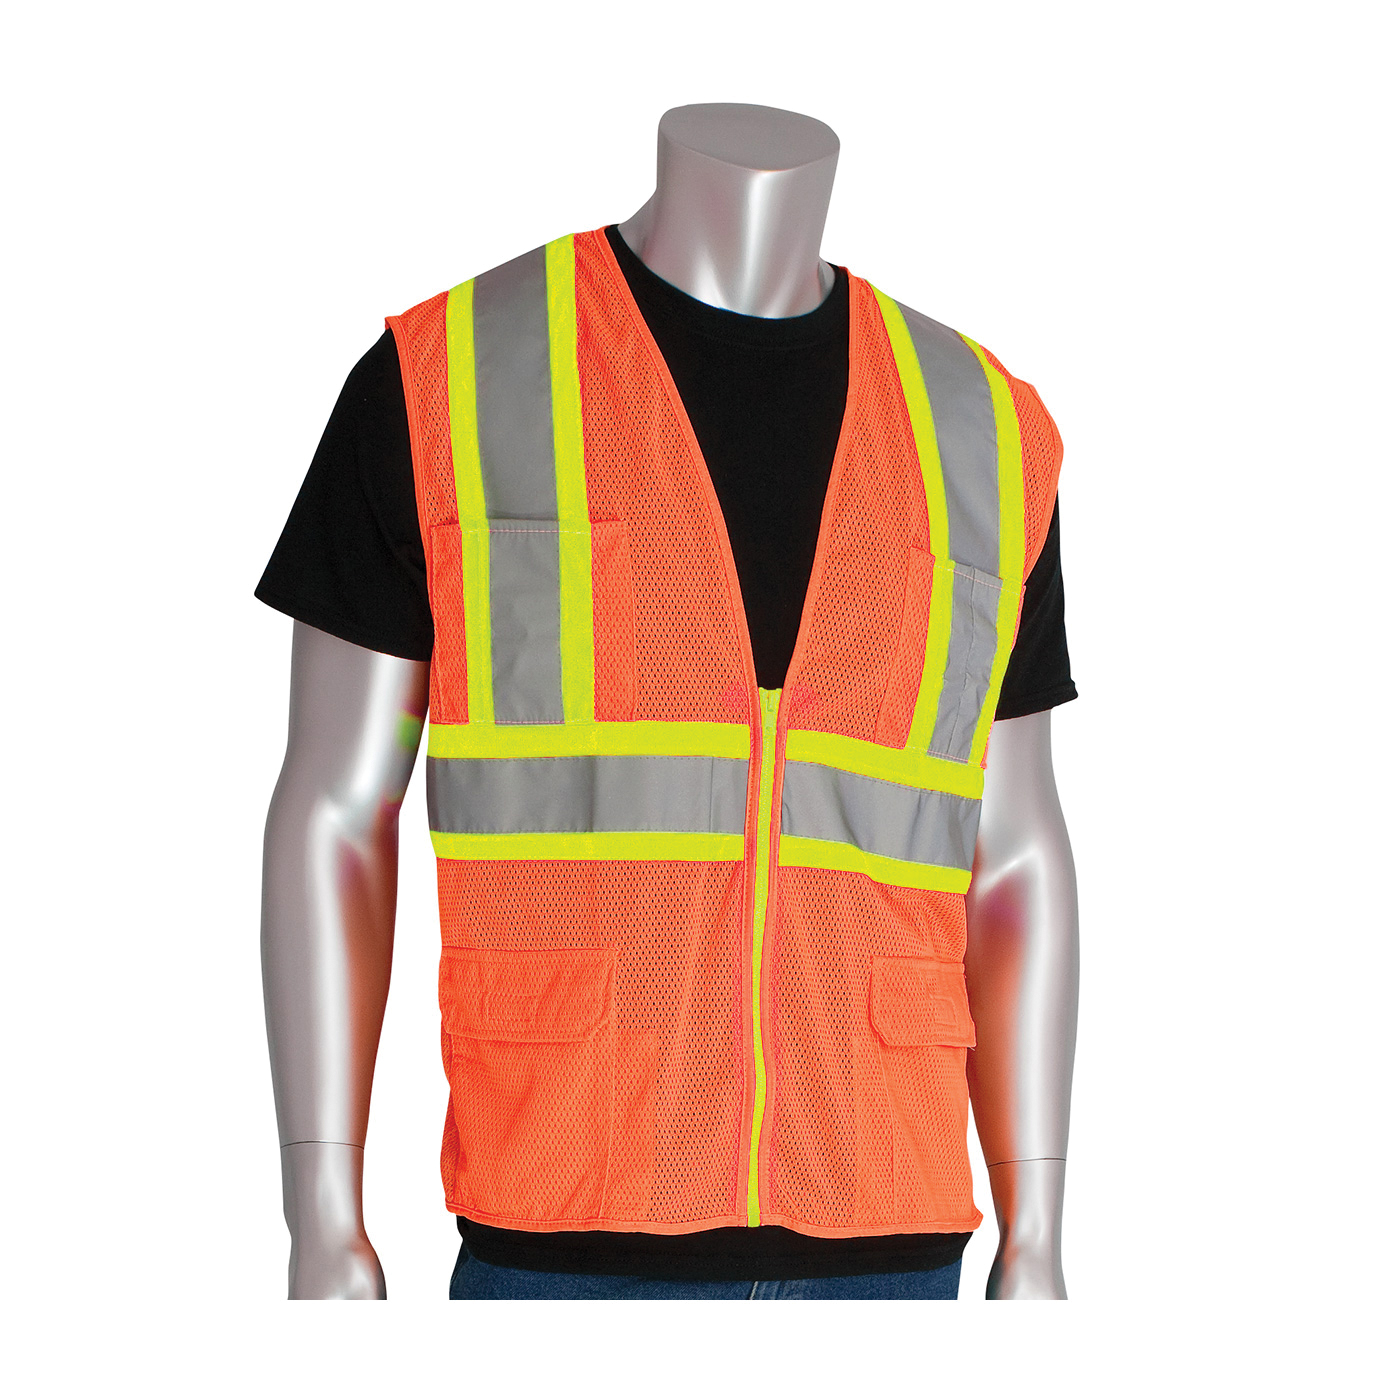 PIP® 302-MAPMOR-L 2-Tone Premium Surveyor Safety Vest, L, Hi-Viz Orange, Polyester, Zipper Closure, 11 Pockets, ANSI Class: Class 2, Specifications Met: ANSI 107 Type R